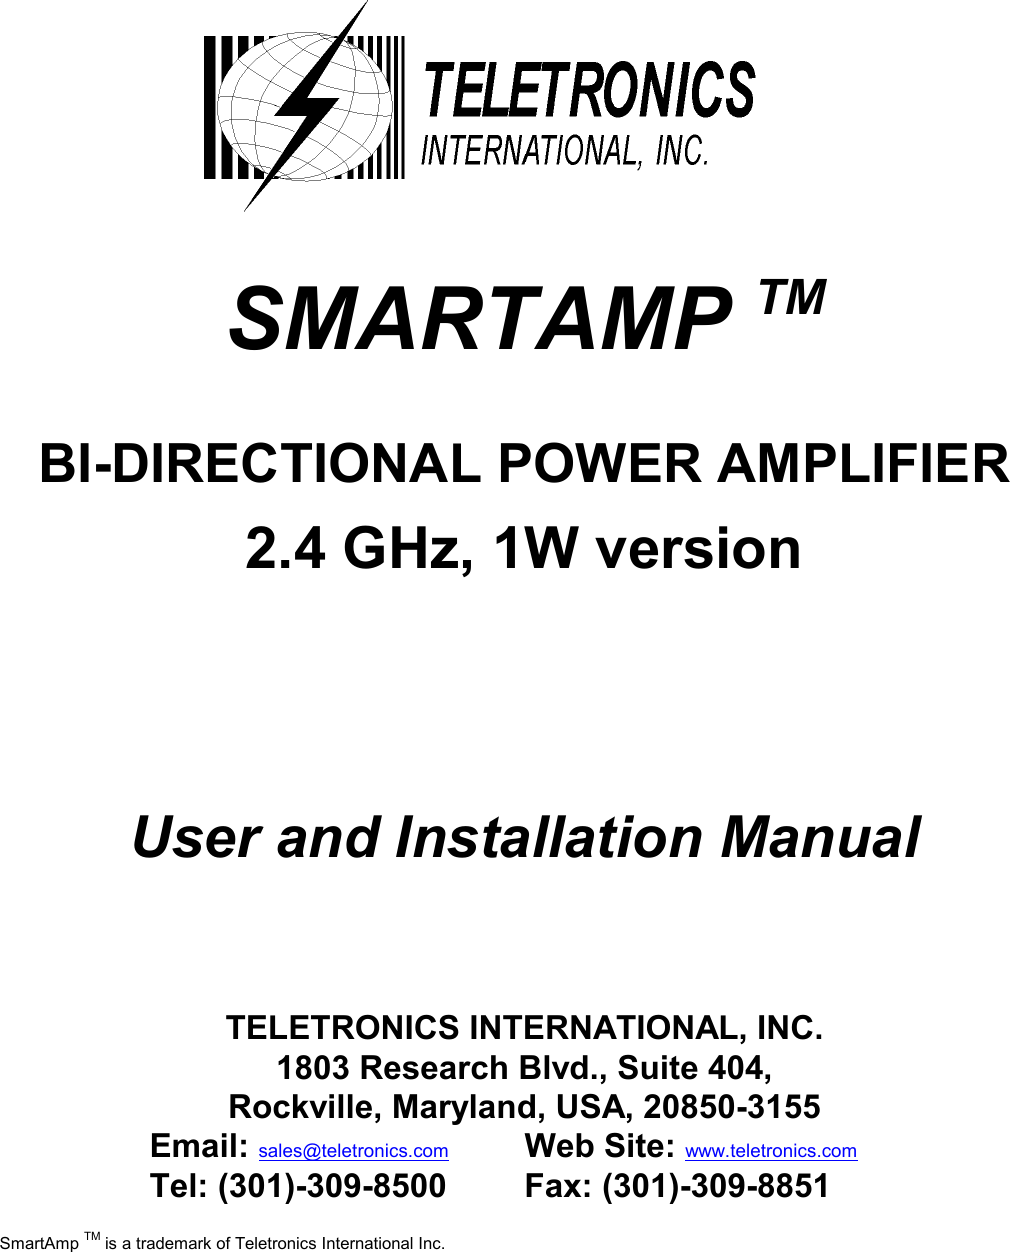          SMARTAMP TM   BI-DIRECTIONAL POWER AMPLIFIER  2.4 GHz, 1W version     User and Installation Manual     TELETRONICS INTERNATIONAL, INC. 1803 Research Blvd., Suite 404, Rockville, Maryland, USA, 20850-3155 Email: sales@teletronics.com  Web Site: www.teletronics.com Tel: (301)-309-8500   Fax: (301)-309-8851  SmartAmp TM is a trademark of Teletronics International Inc.  